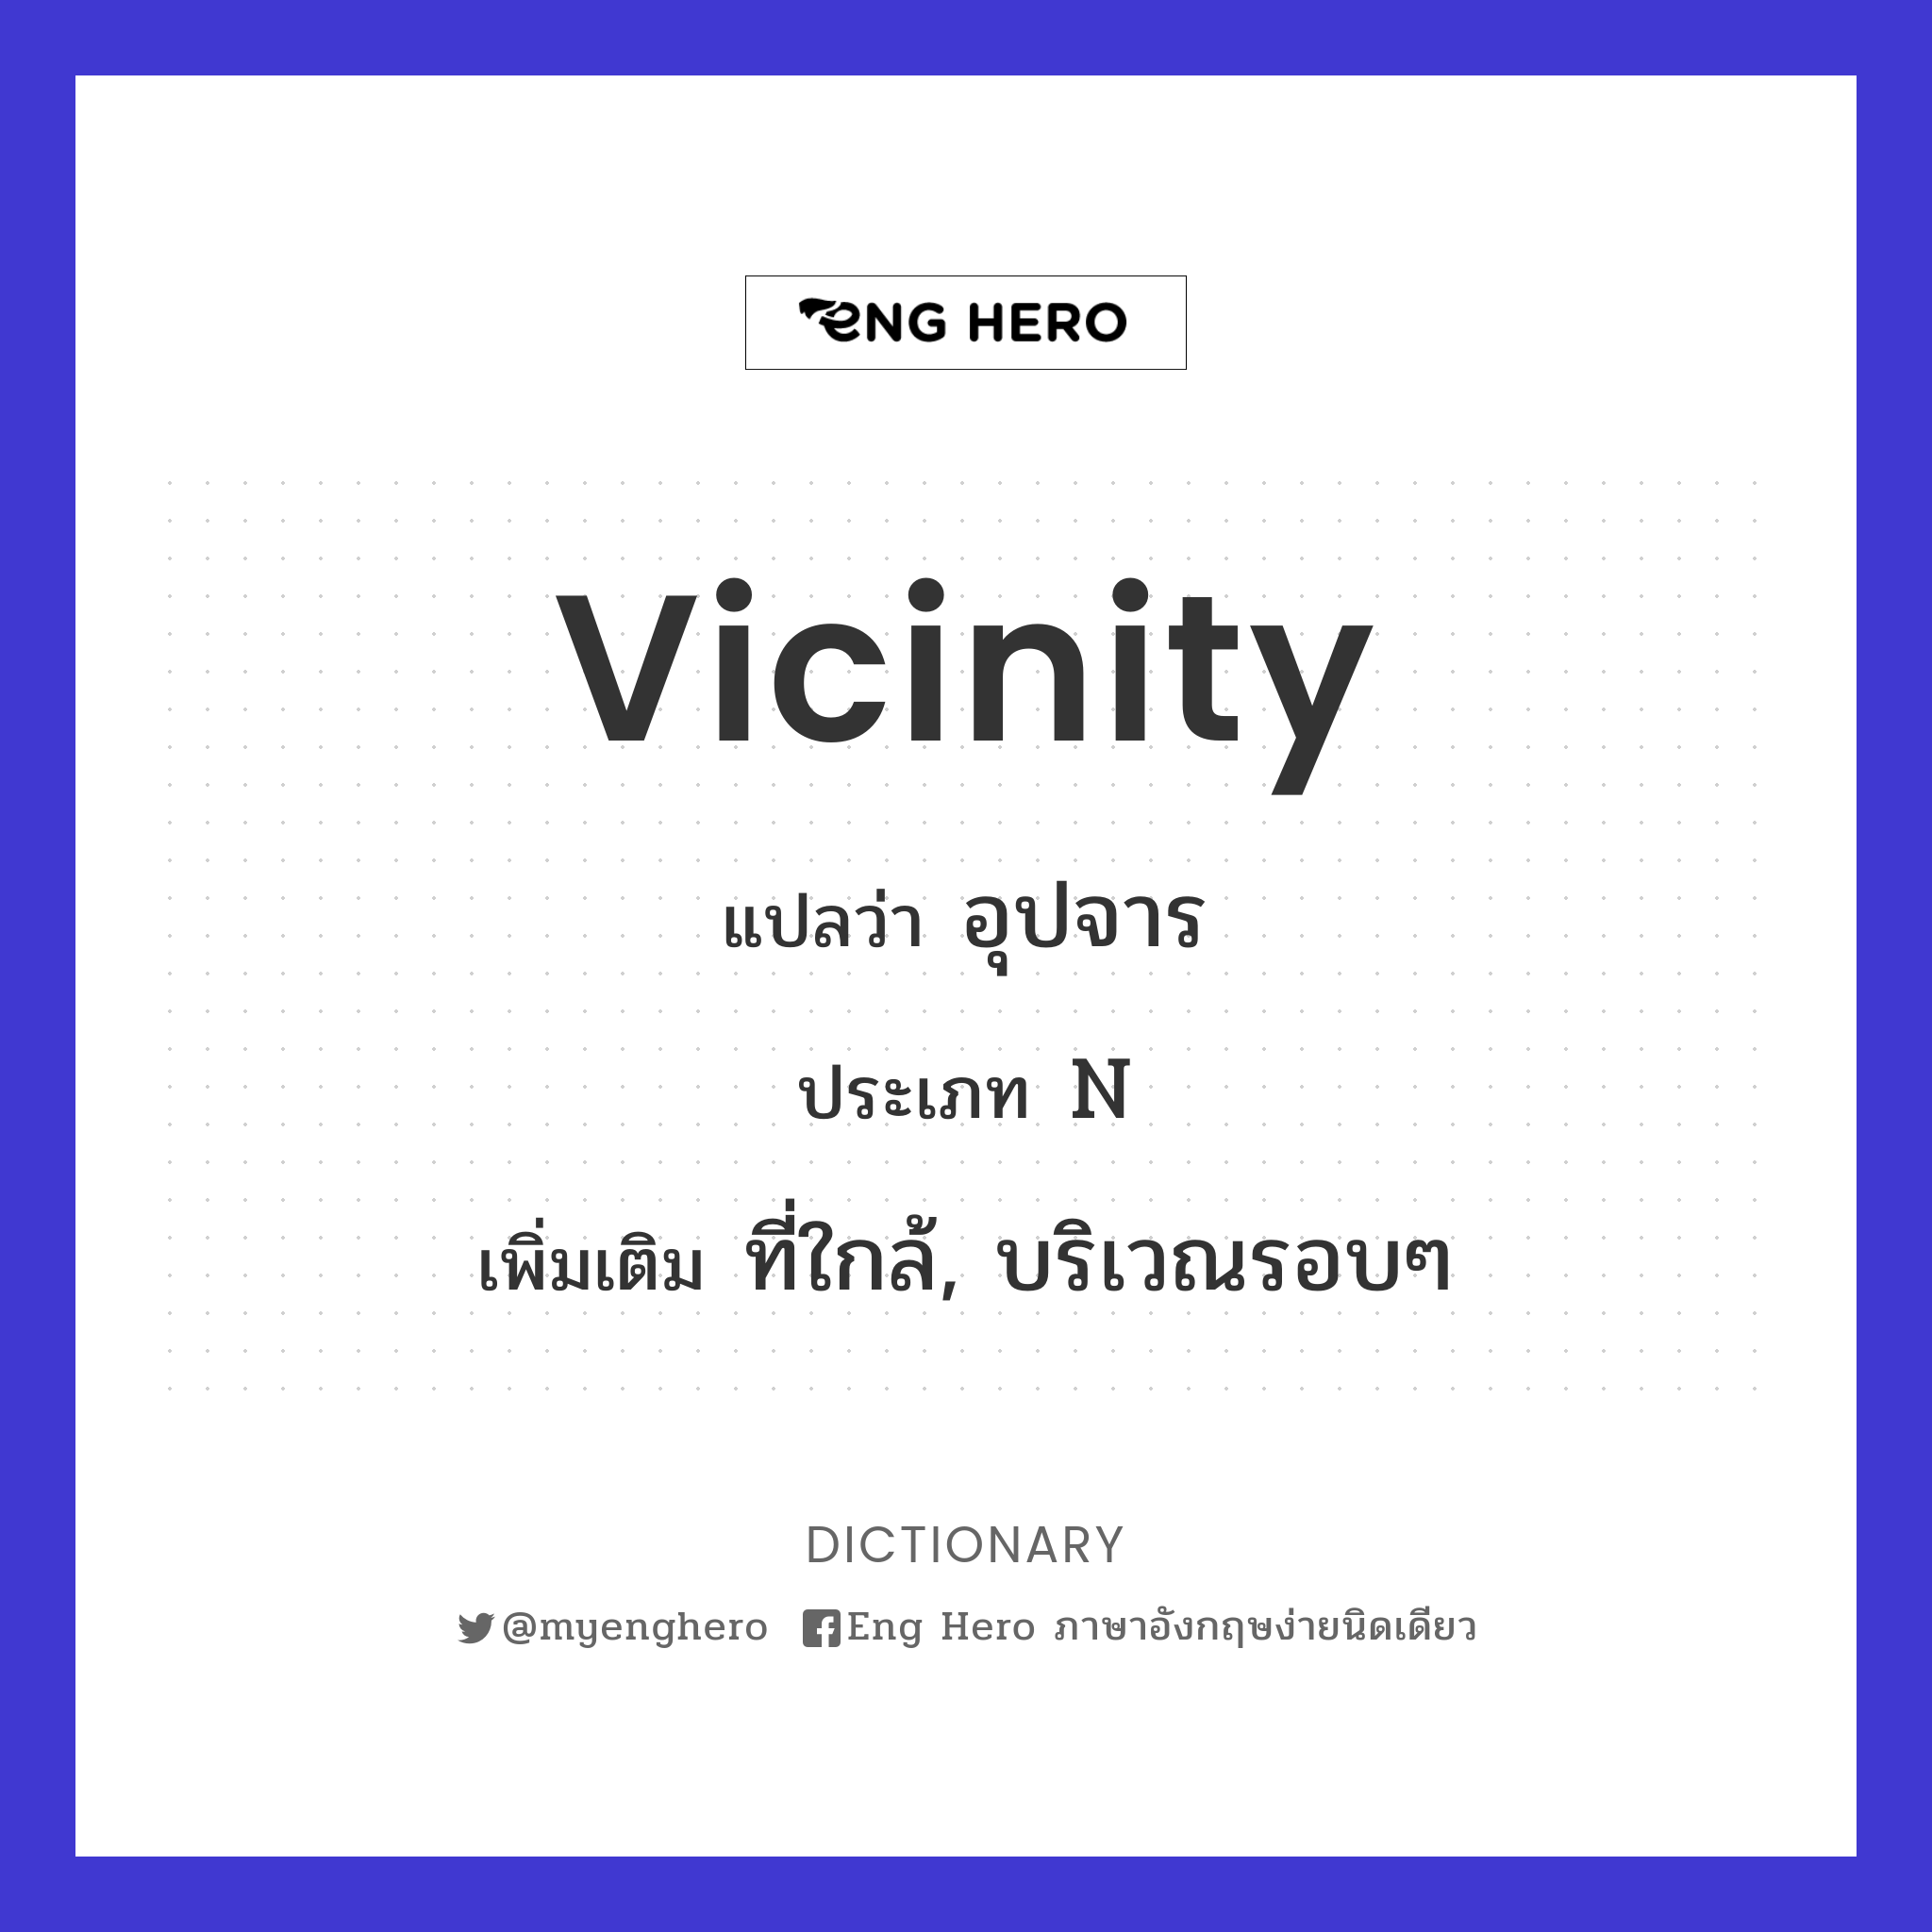 vicinity